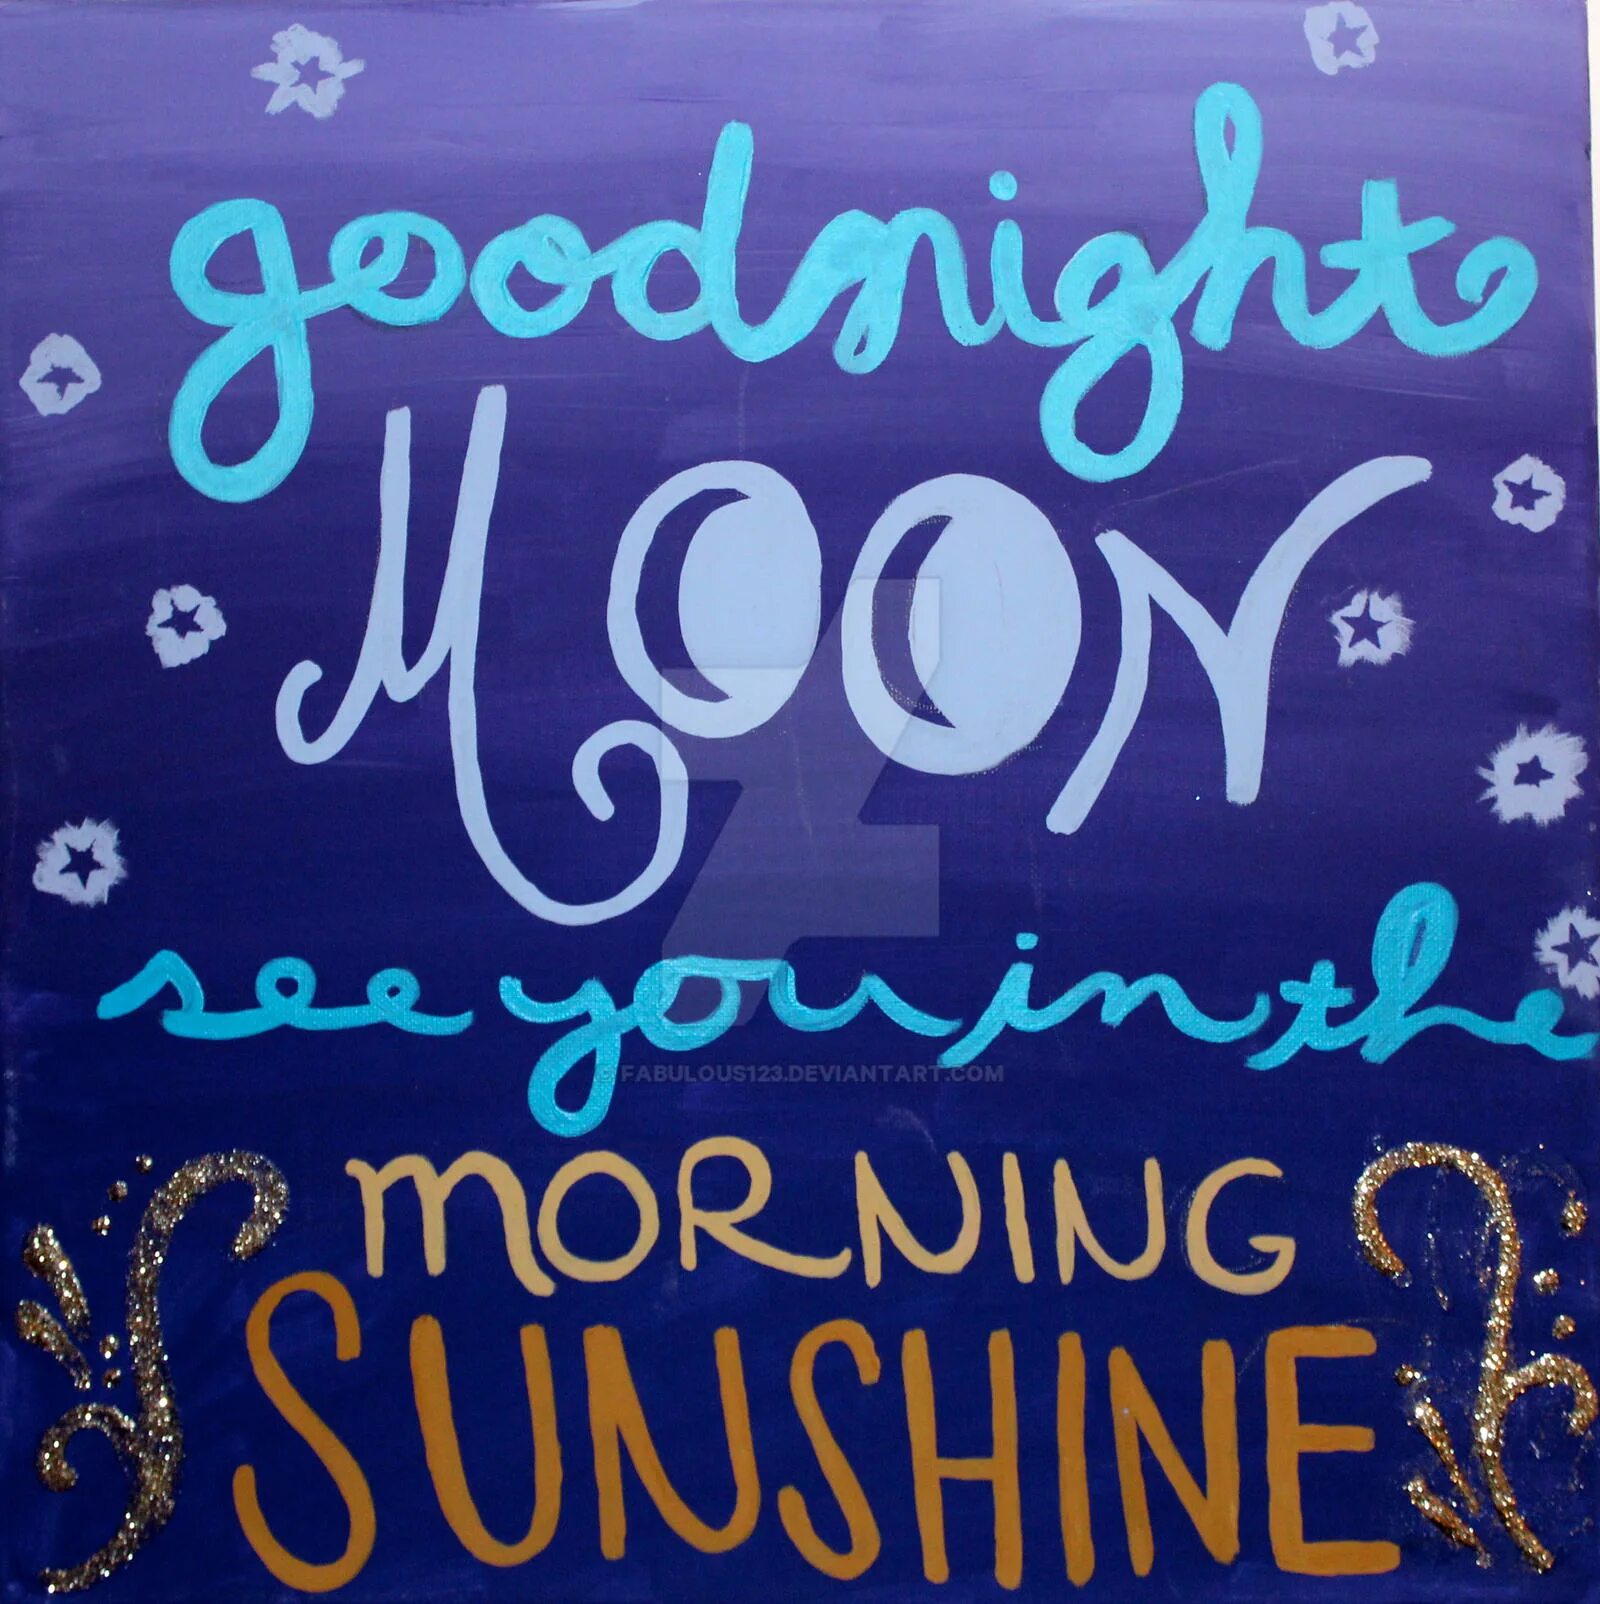 Good Night Sunshine. Goodnight Moon книга. Good Night Sunshine перевод. Goodnight Moon hot.